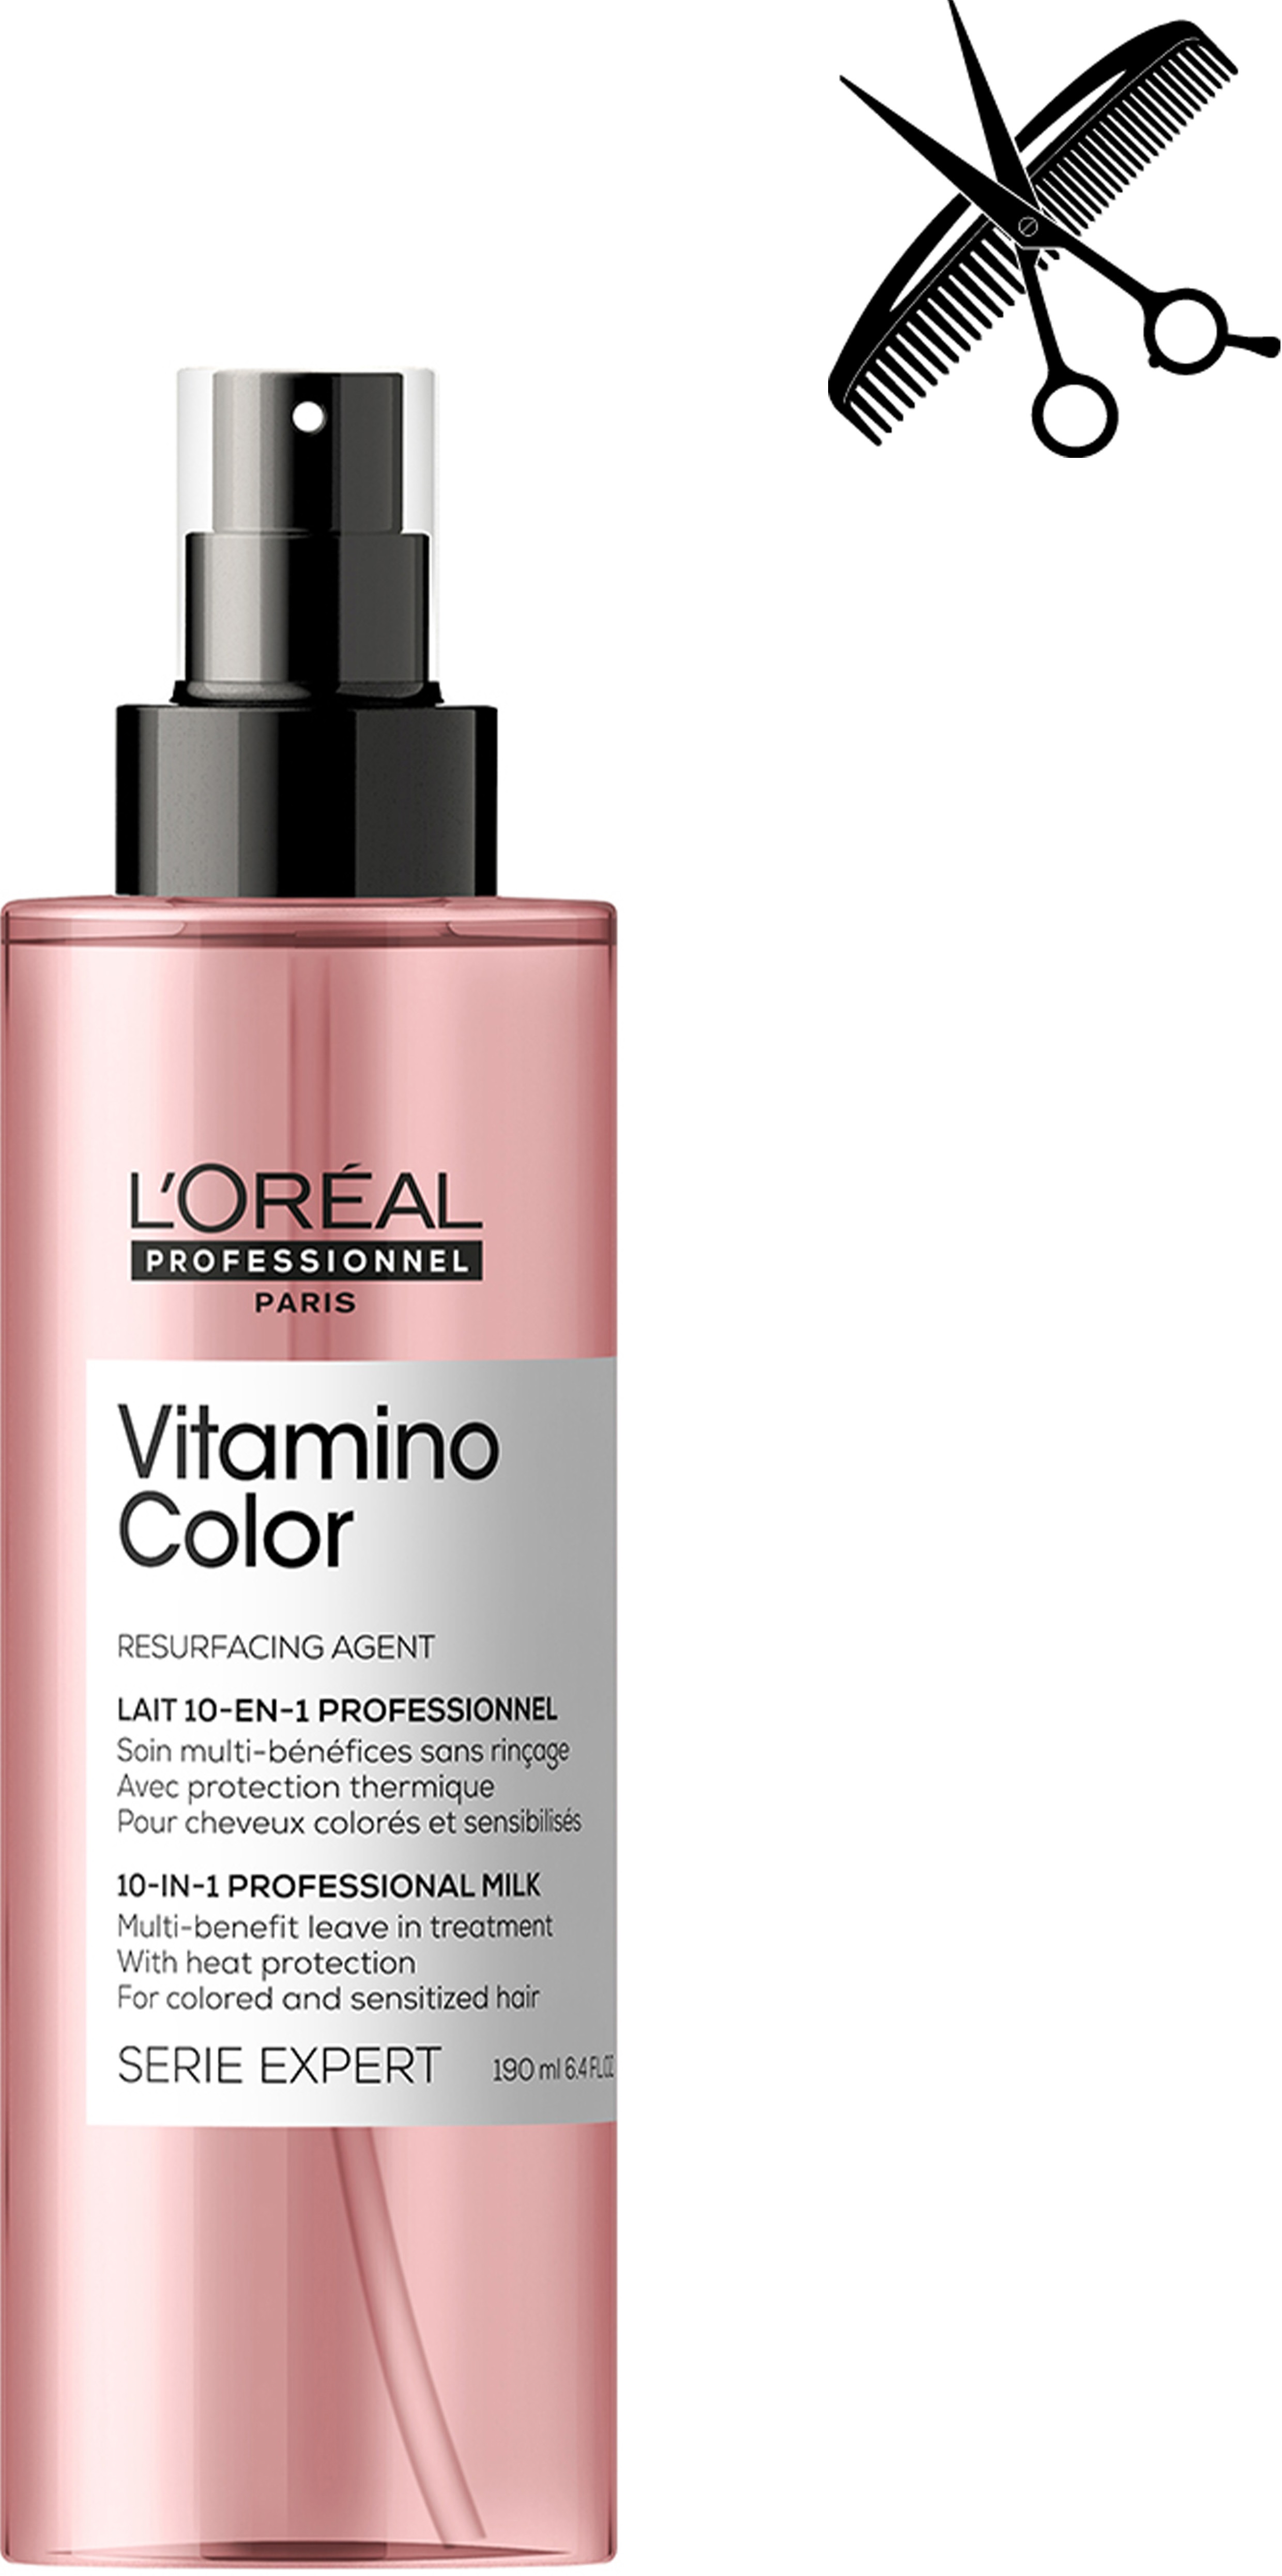 L'Oreal Professionnel Шампунь Serie Expert Vitamino Color для окрашенных волос, мл